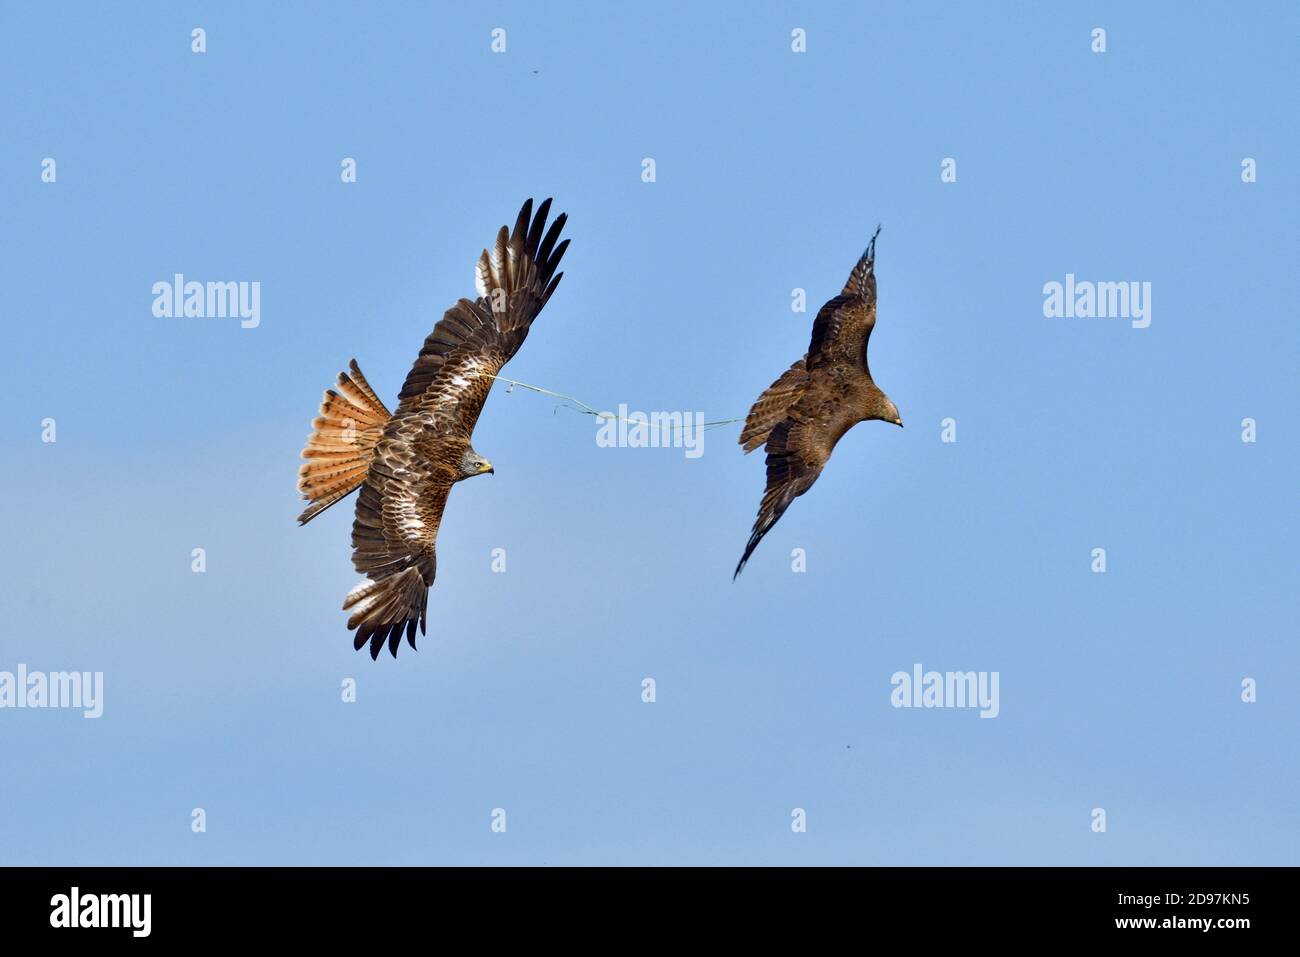 Red Kite (Milvus milvus) pursuing a Black Kite (Milvus migrans) to take its prey, France Stock Photo